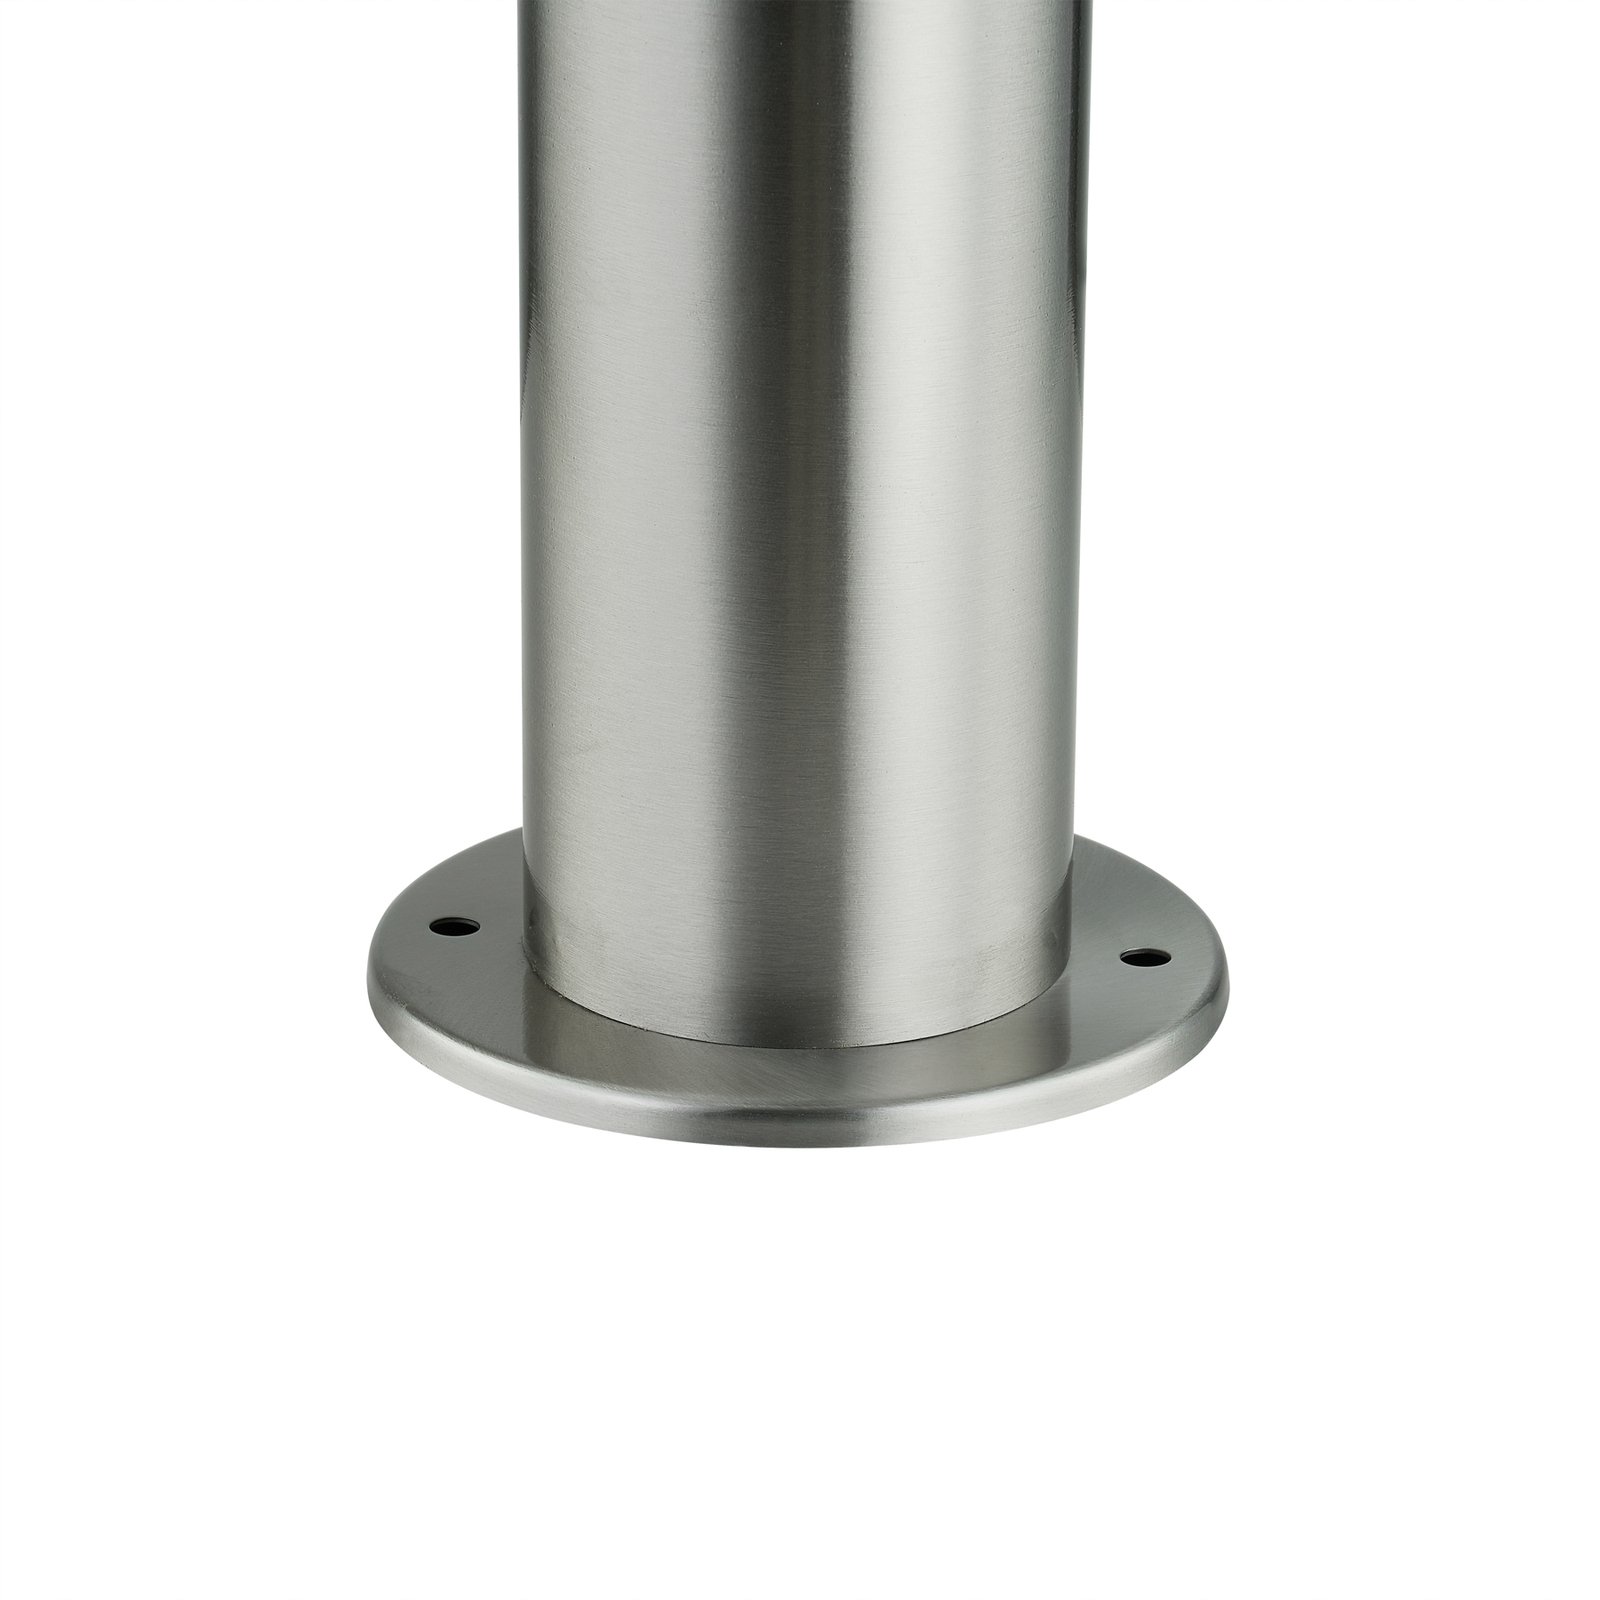 Lindby Statius sokkellamp, grijs, roestvrij staal, sensor, 45 cm